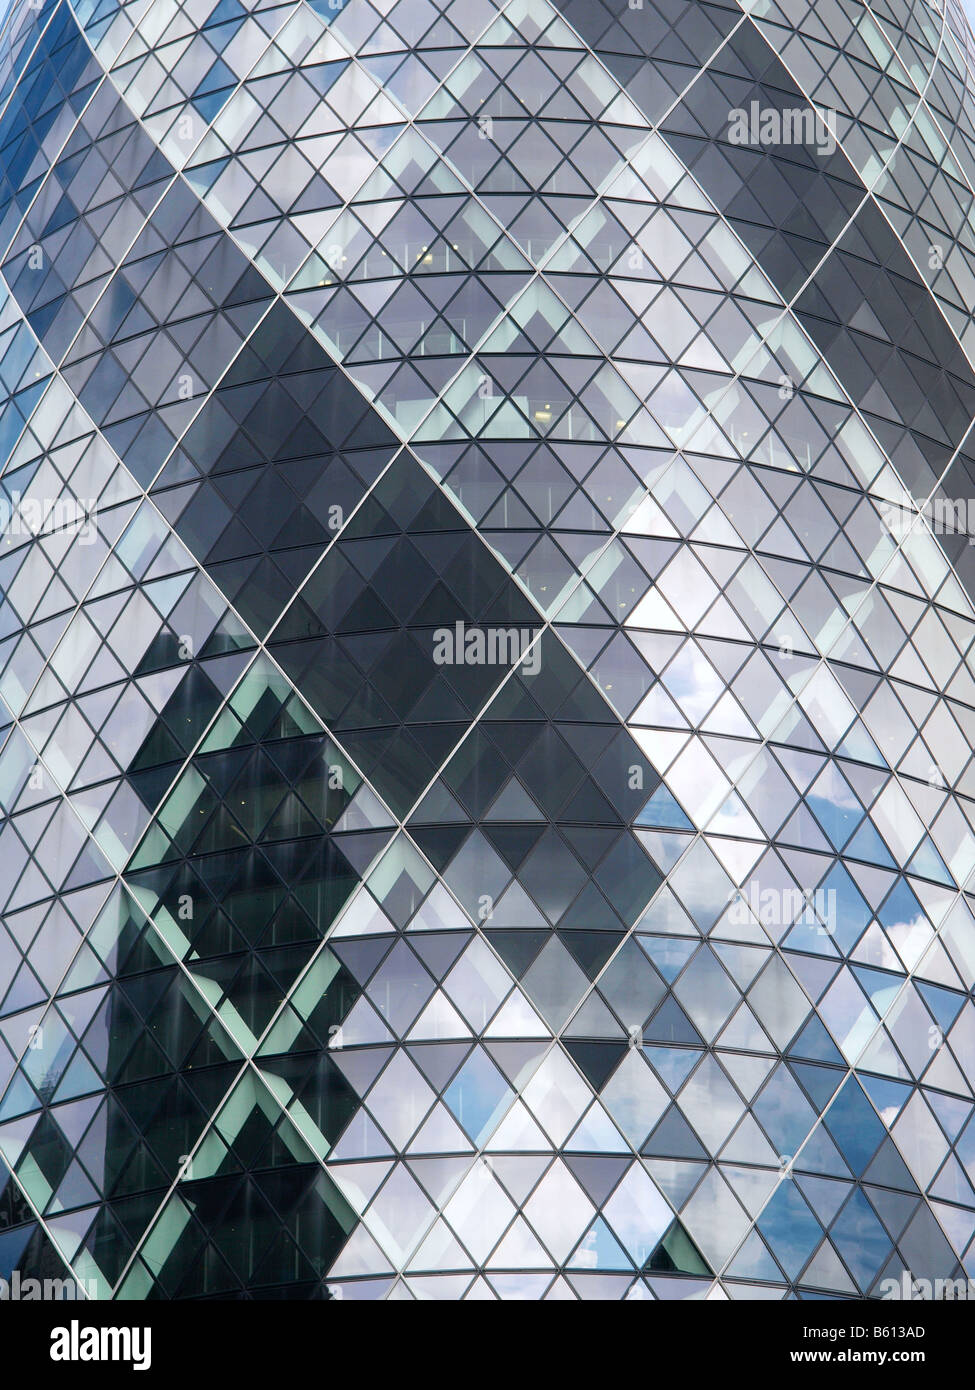 Swiss Reinsurance Gherkin building detail UK London city Banque D'Images